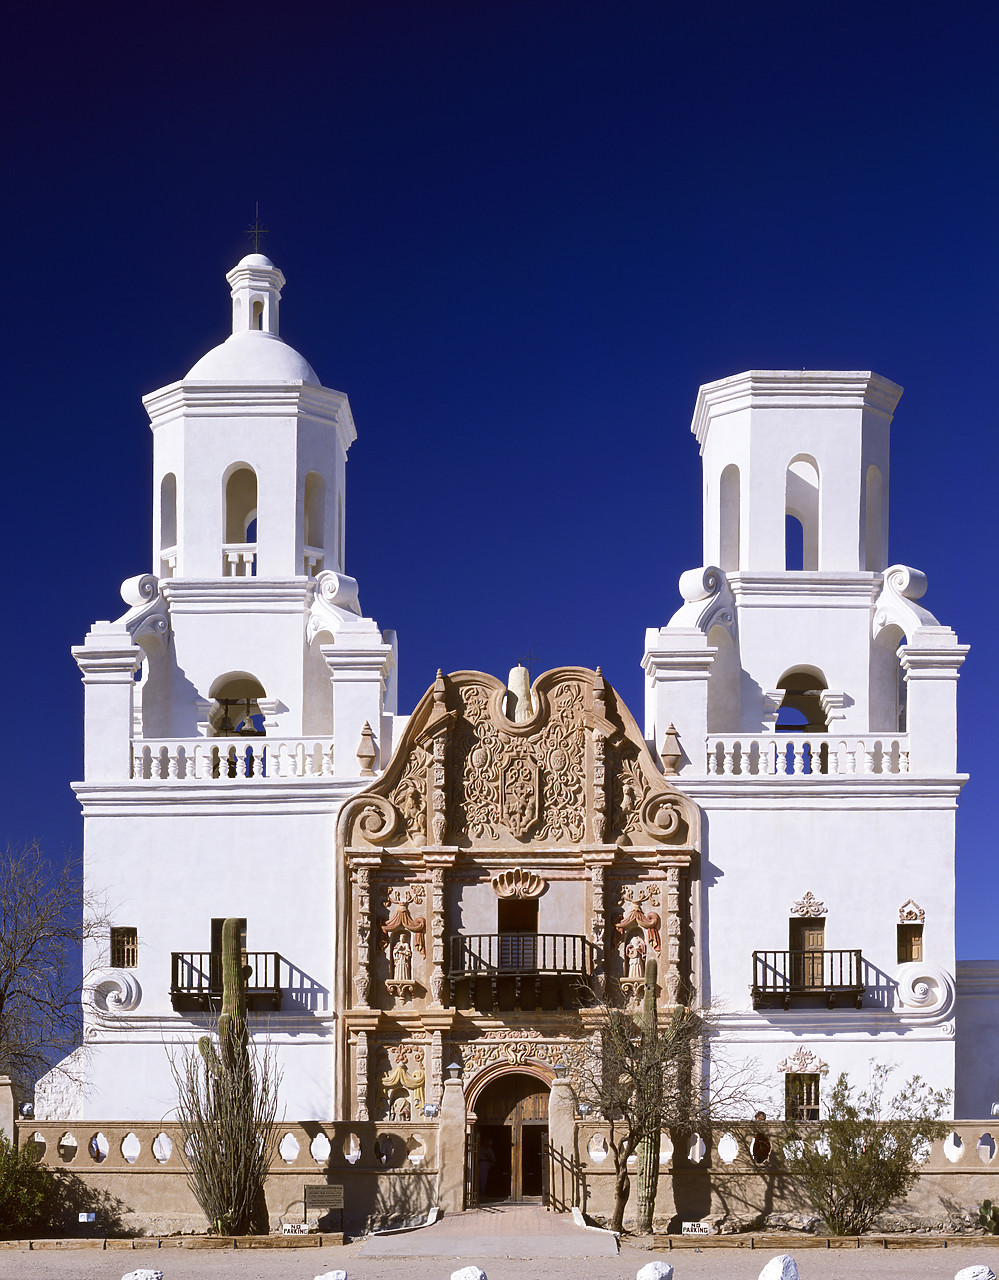 #891961-4 - Mission San Xavier del Bac, Tucson, Arizona, USA